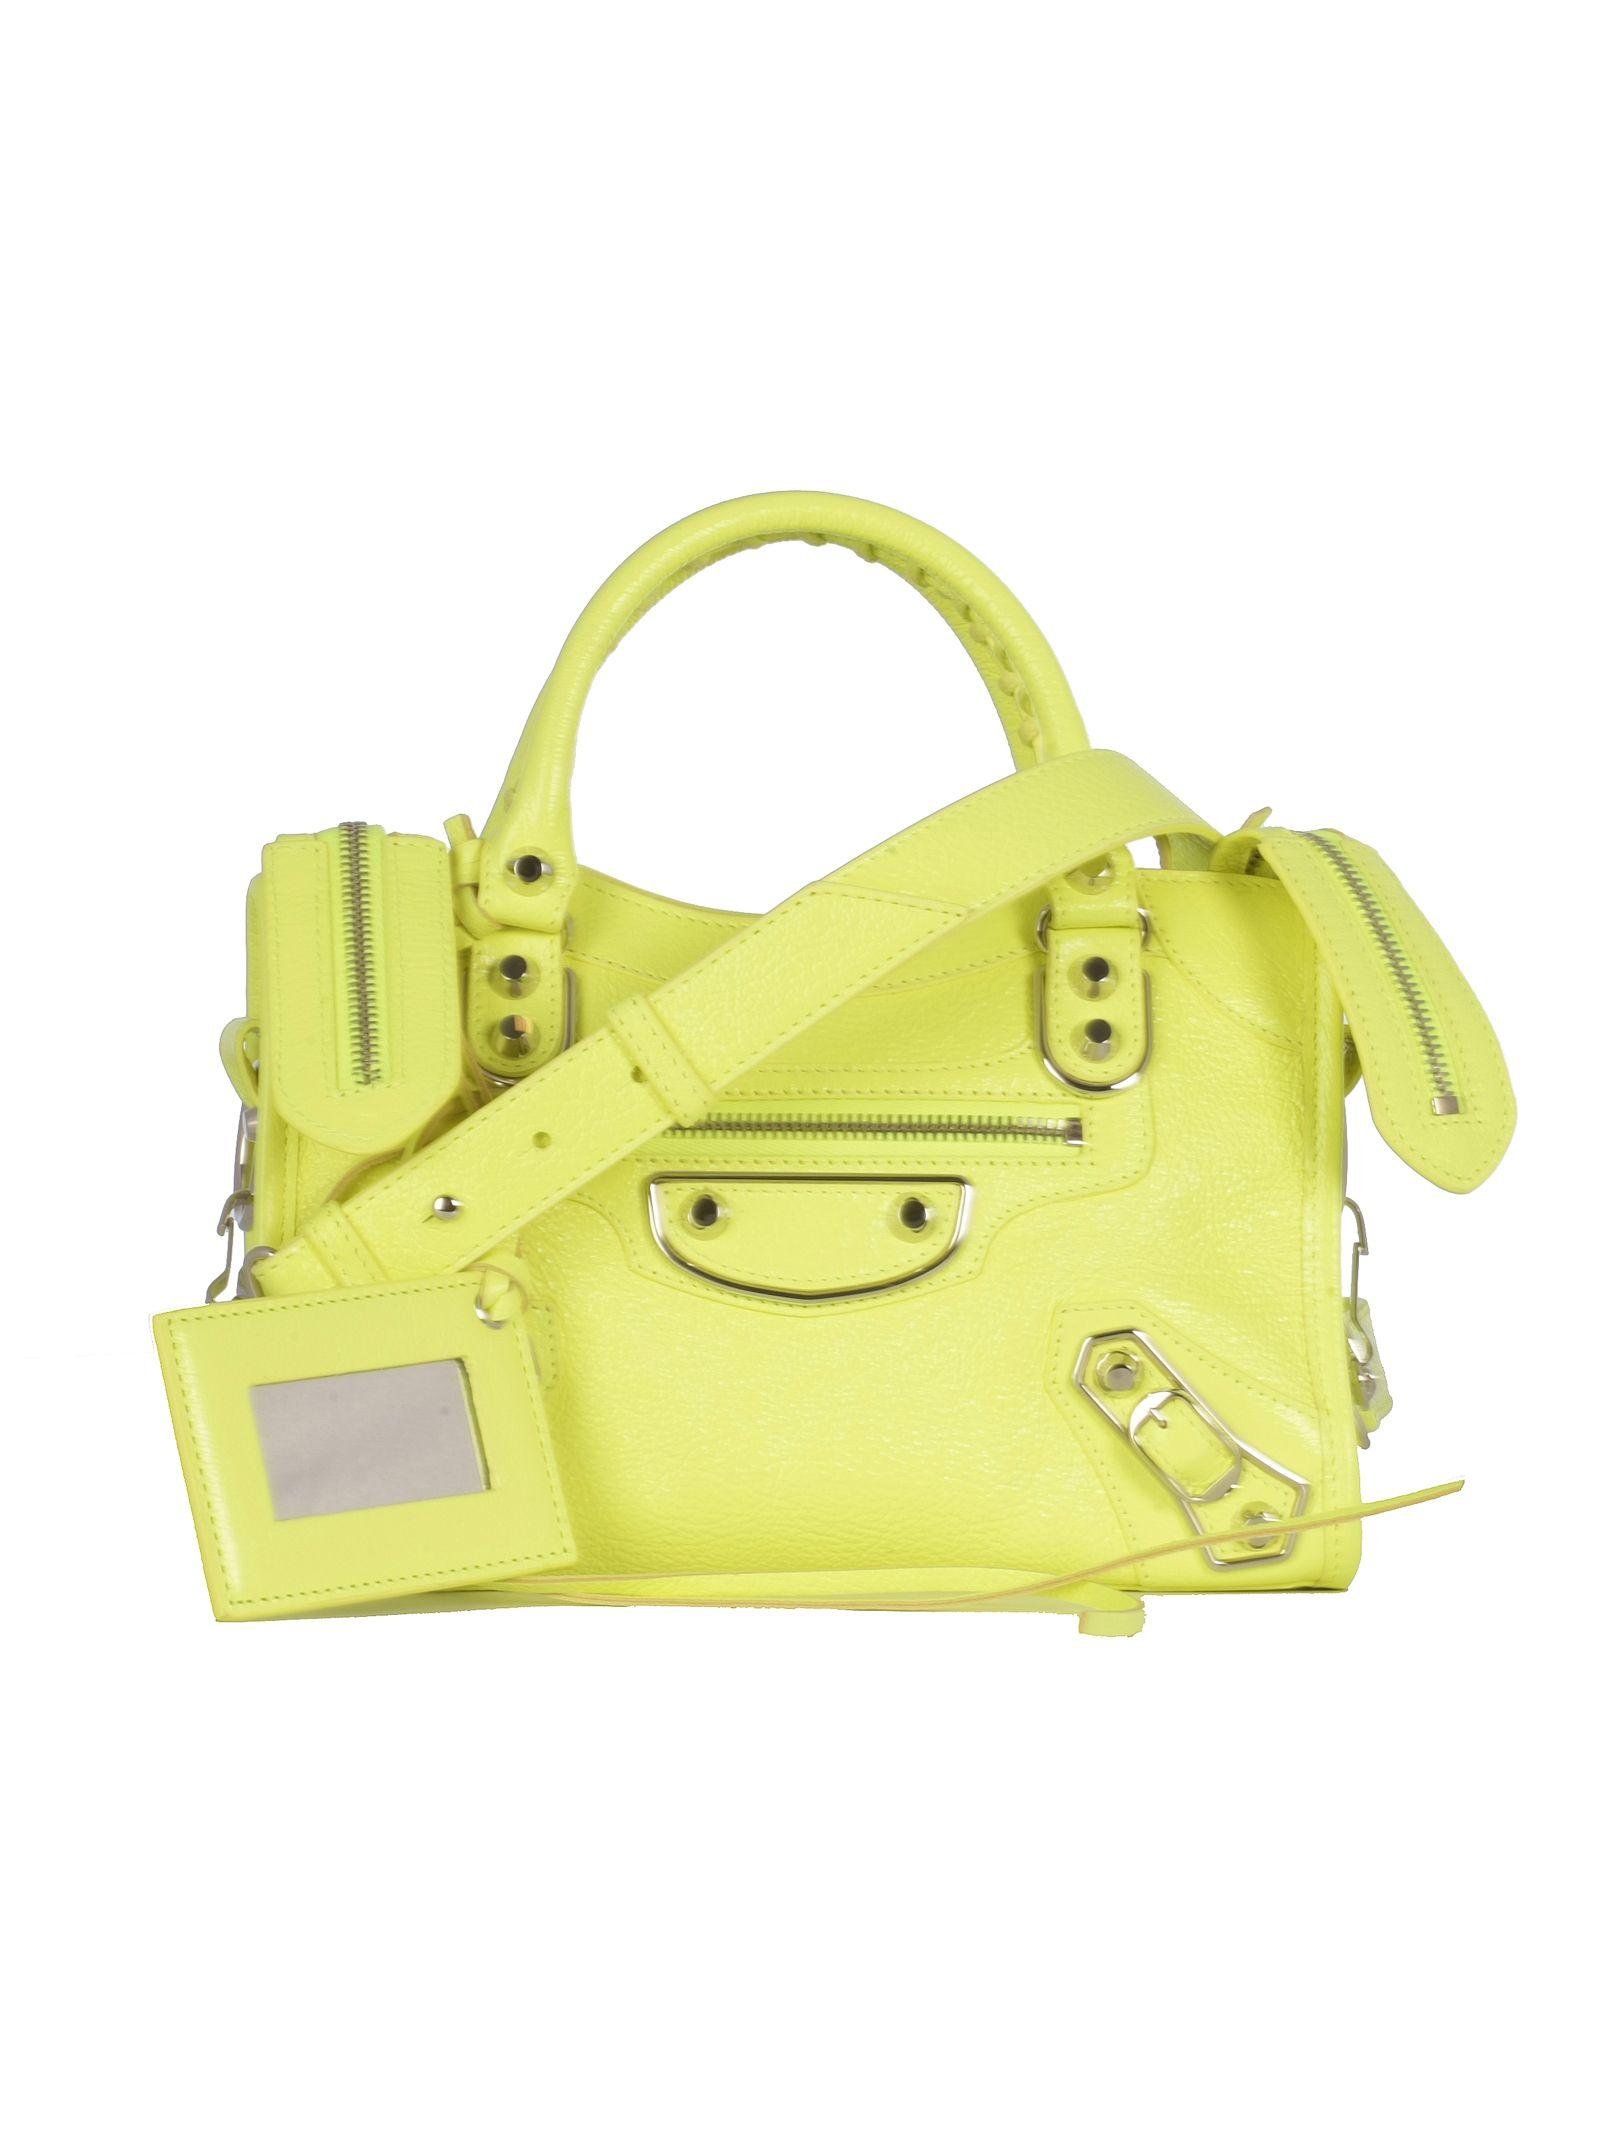 Balenciaga Yellow Leather Handbag in Yellow - Lyst